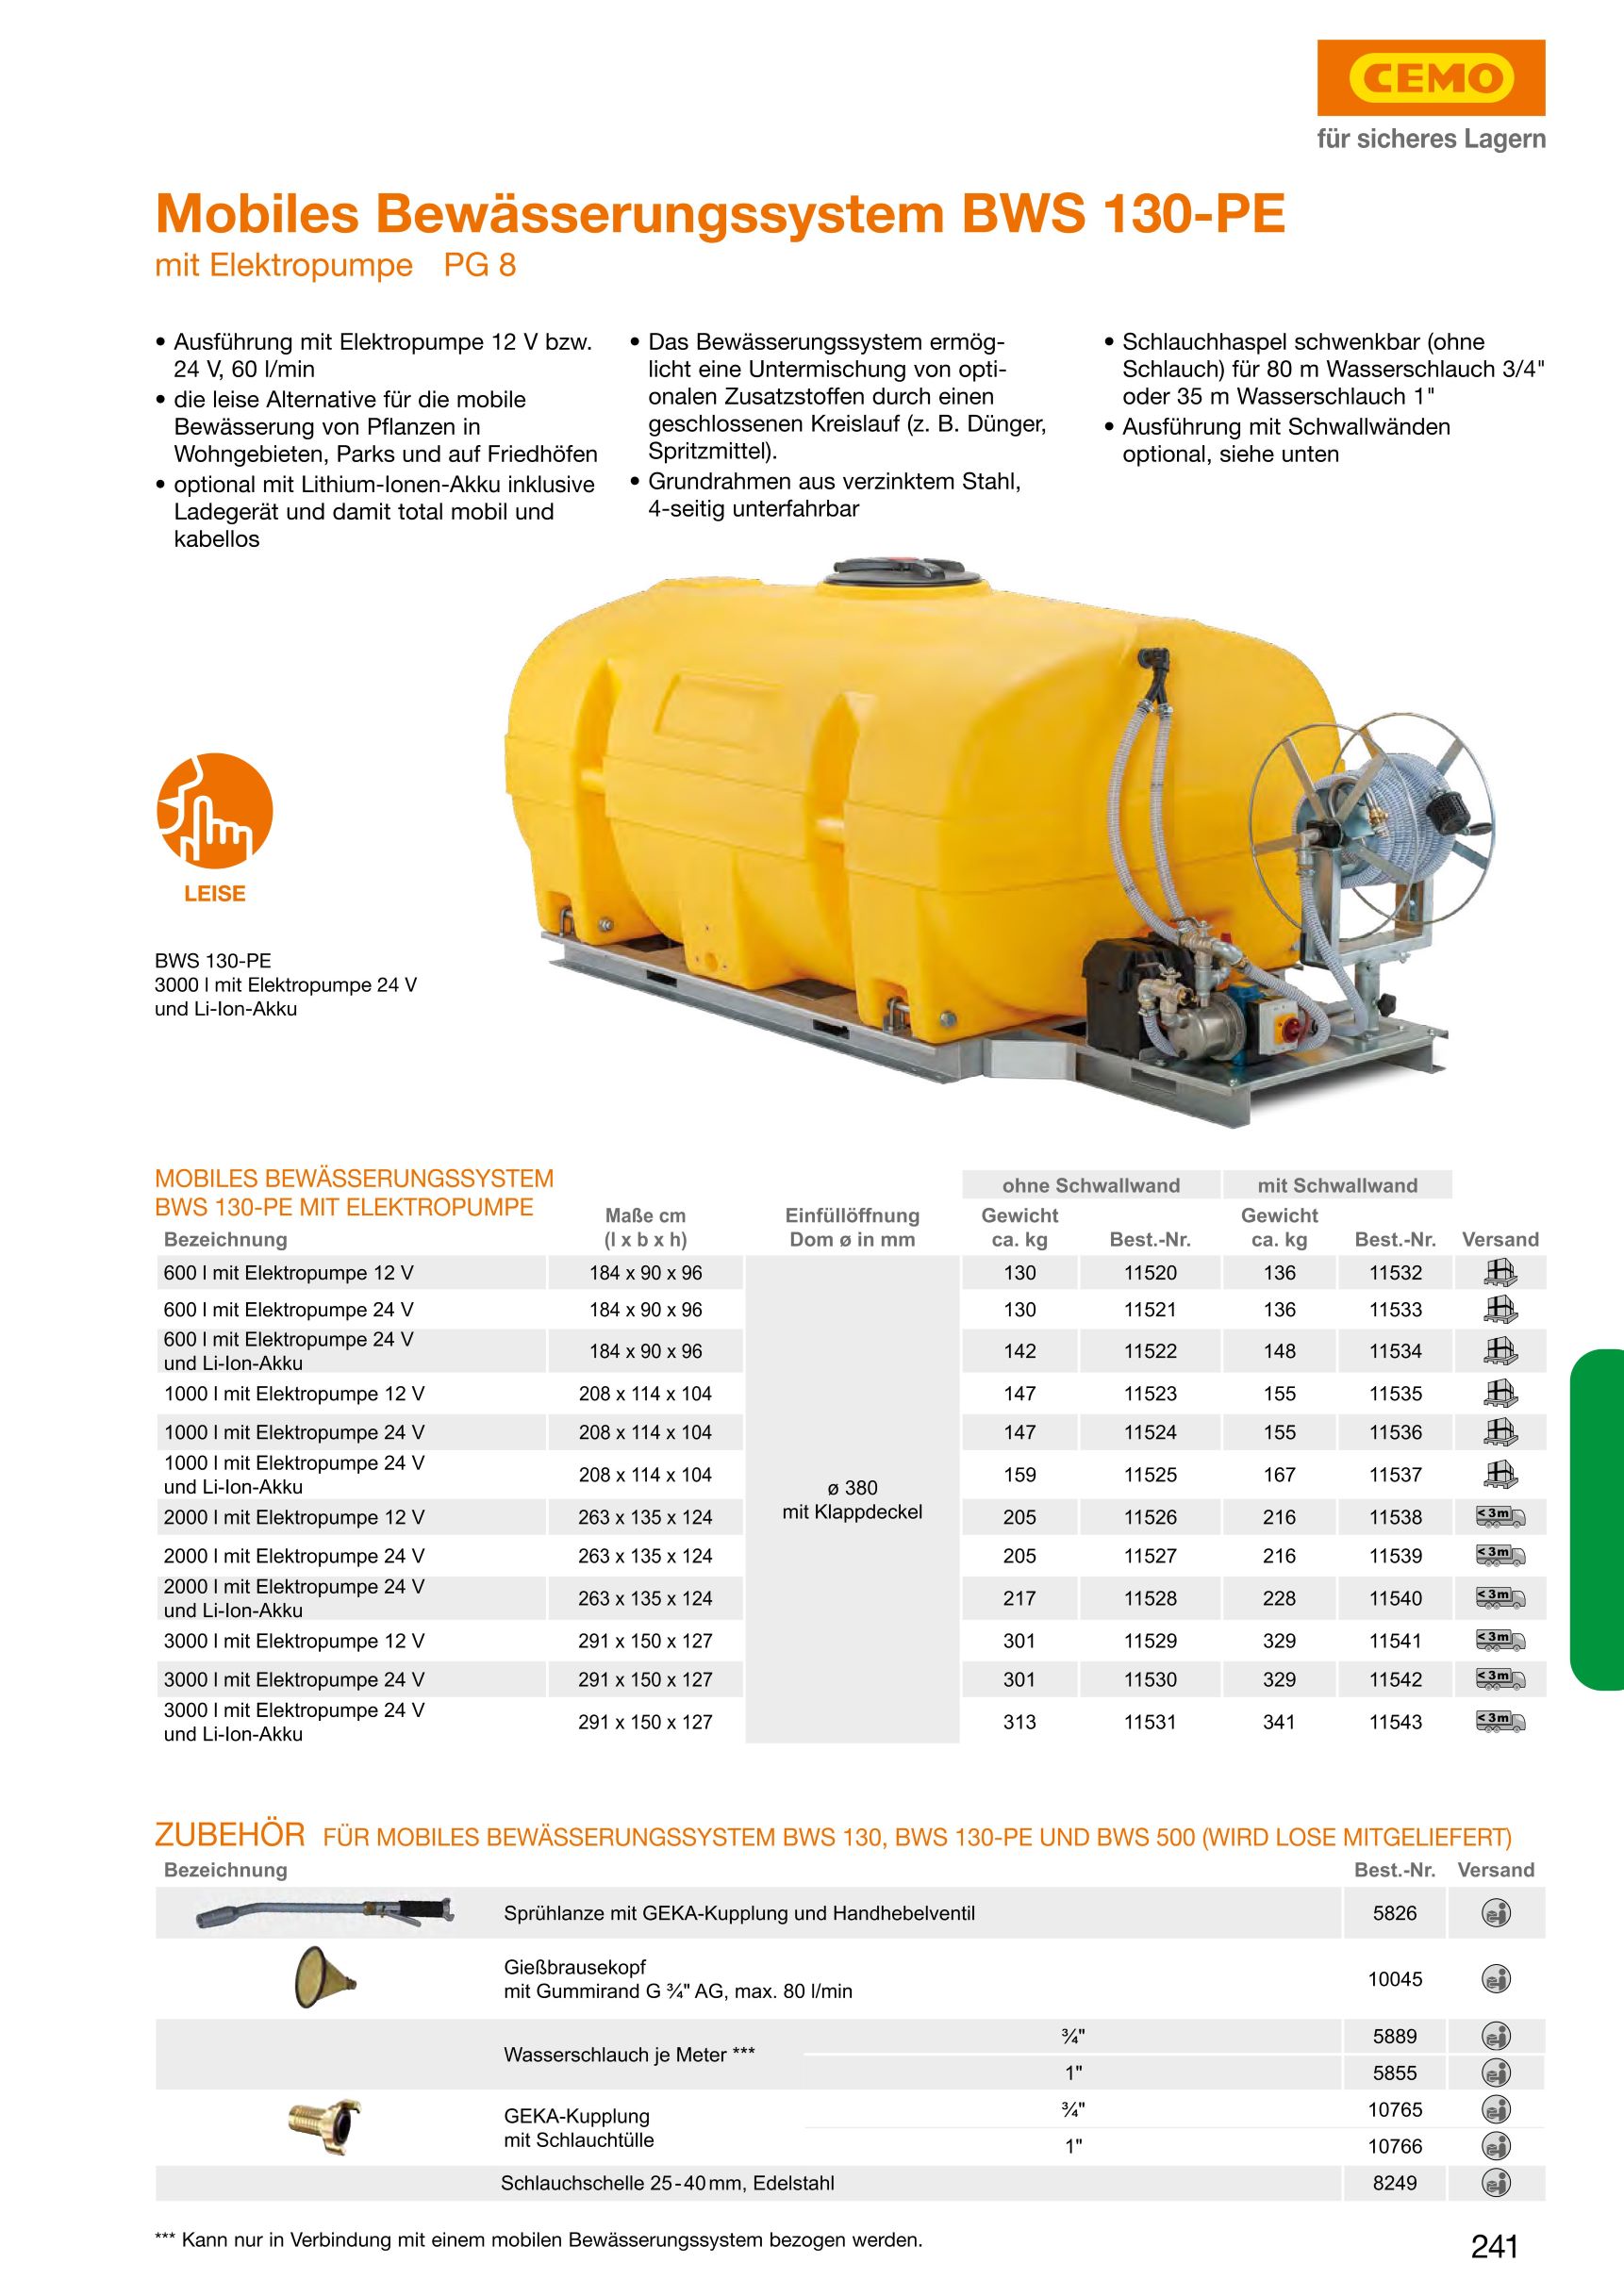 CEMO Mobiles Bewässerungssystem BWS 130-PE, 3000 l, 12 V Pumpe, Schwallwände - 11541